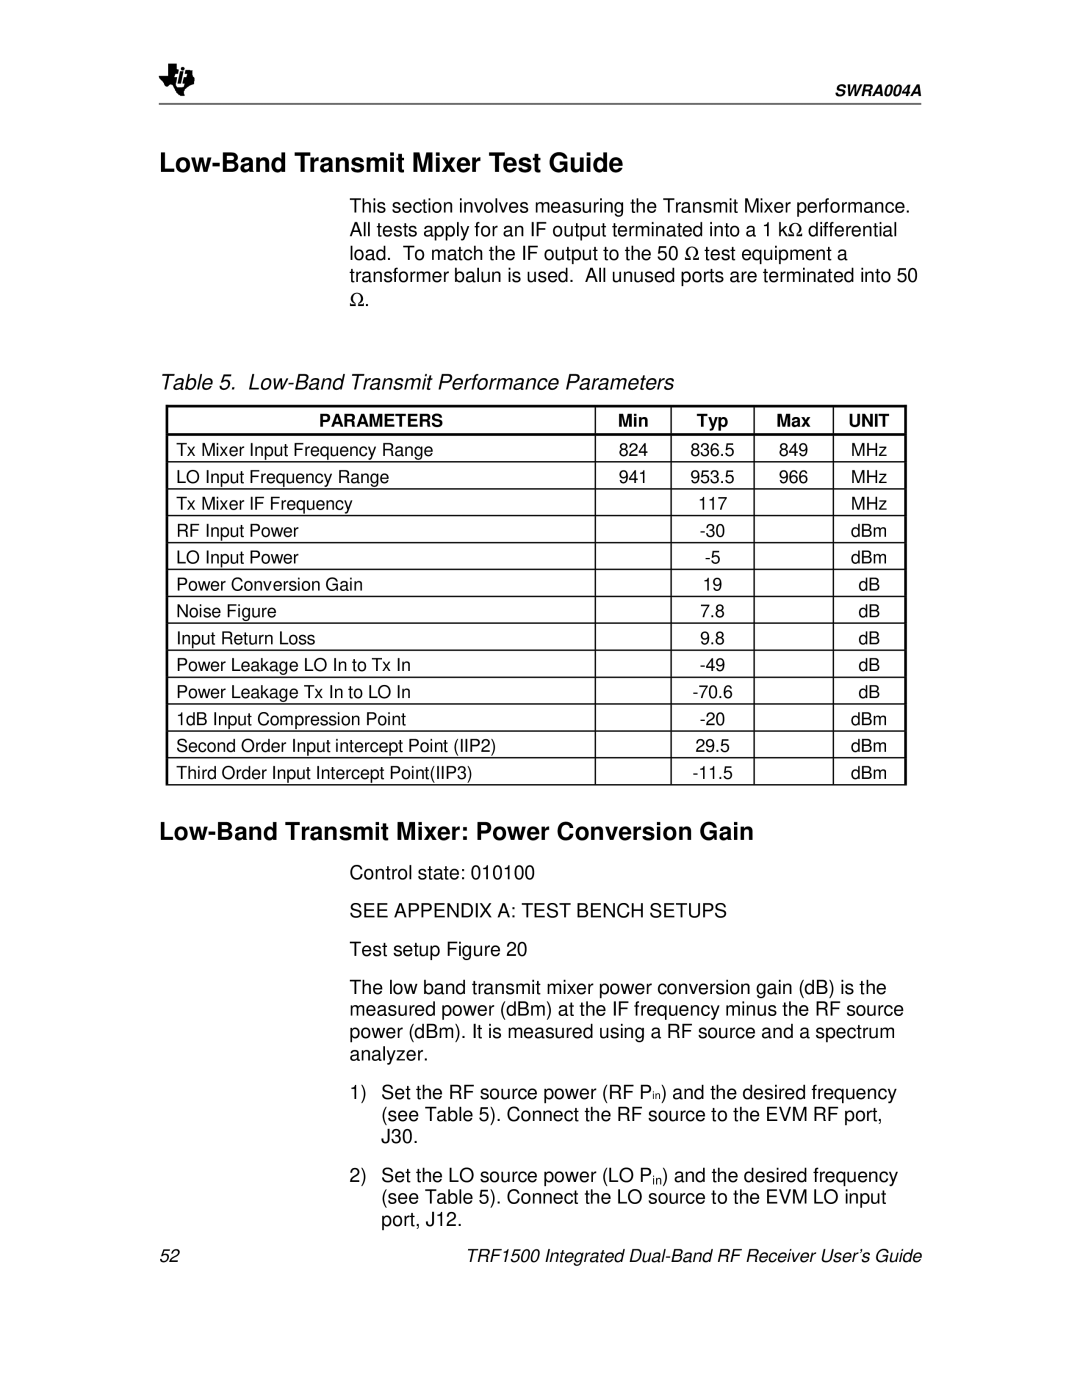 Texas Instruments TRF1500 manual Low-BandTransmit Mixer Test Guide, Low-BandTransmit Mixer Power Conversion Gain 